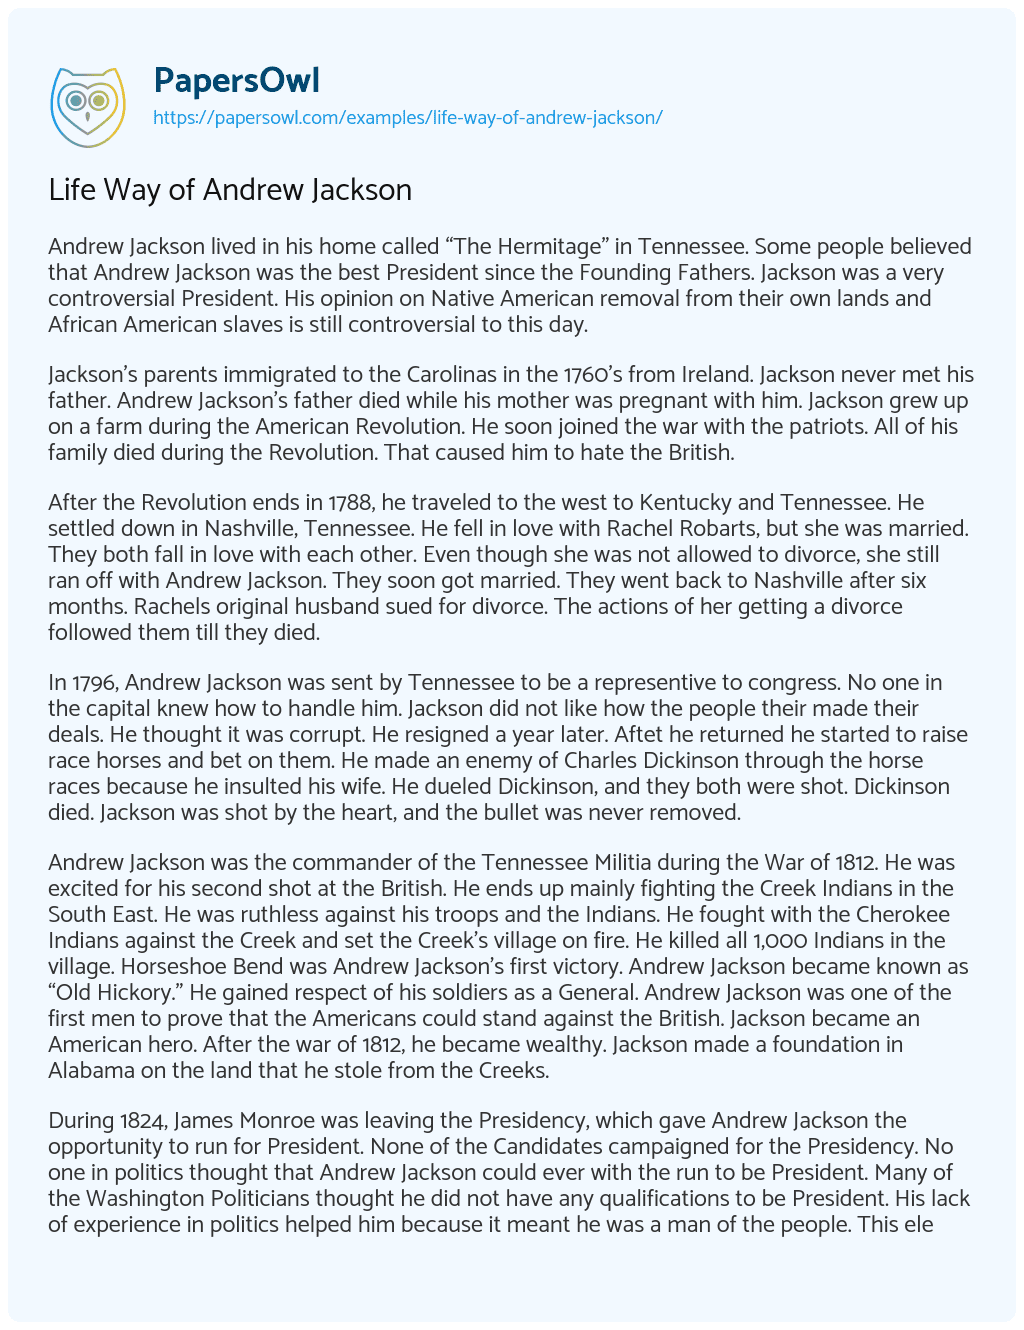 Essay on Life Way of Andrew Jackson